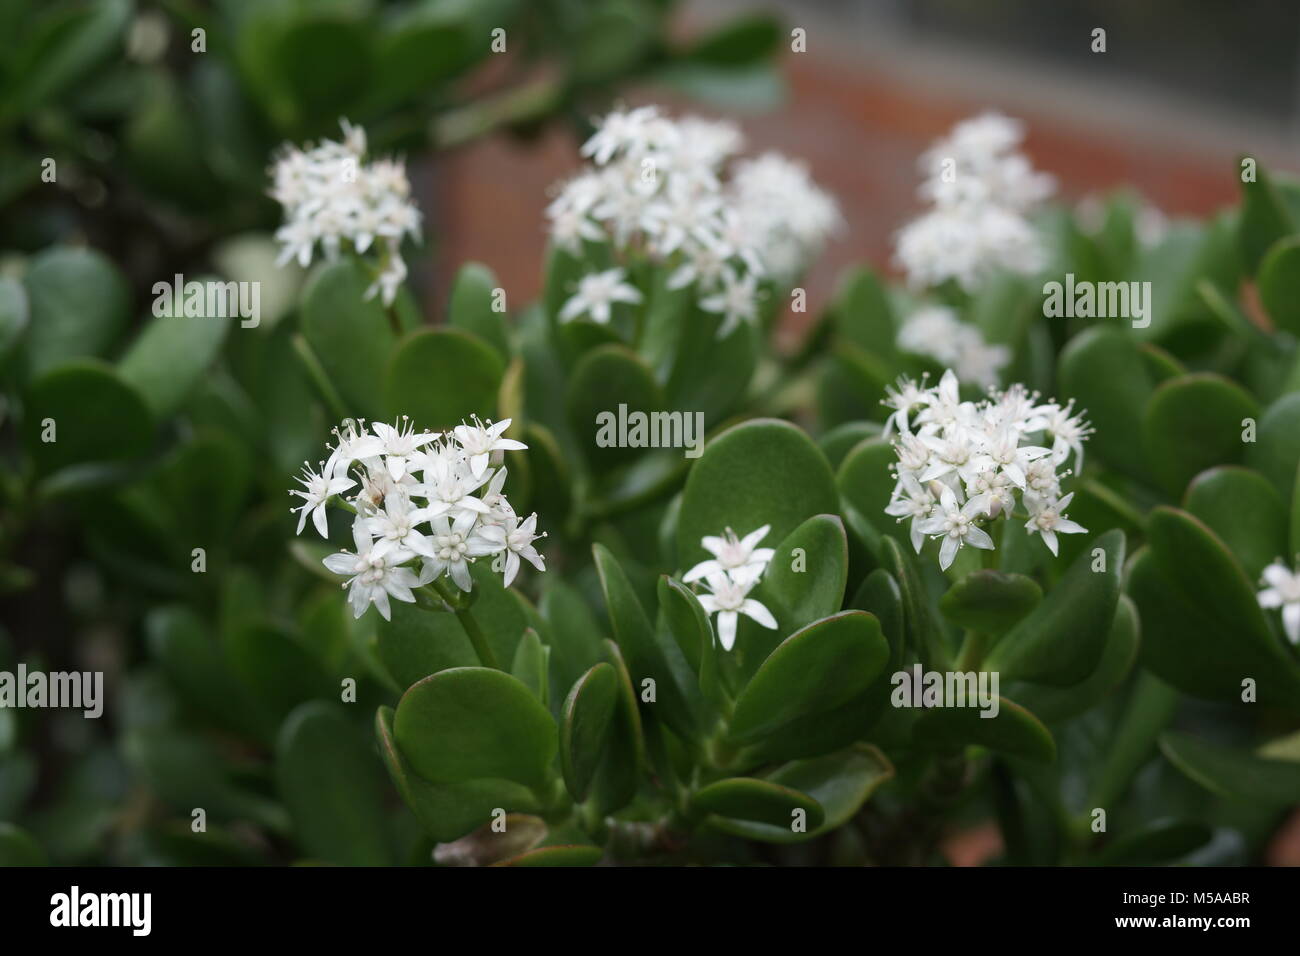 flowers of Crassula ovata Stock Photo